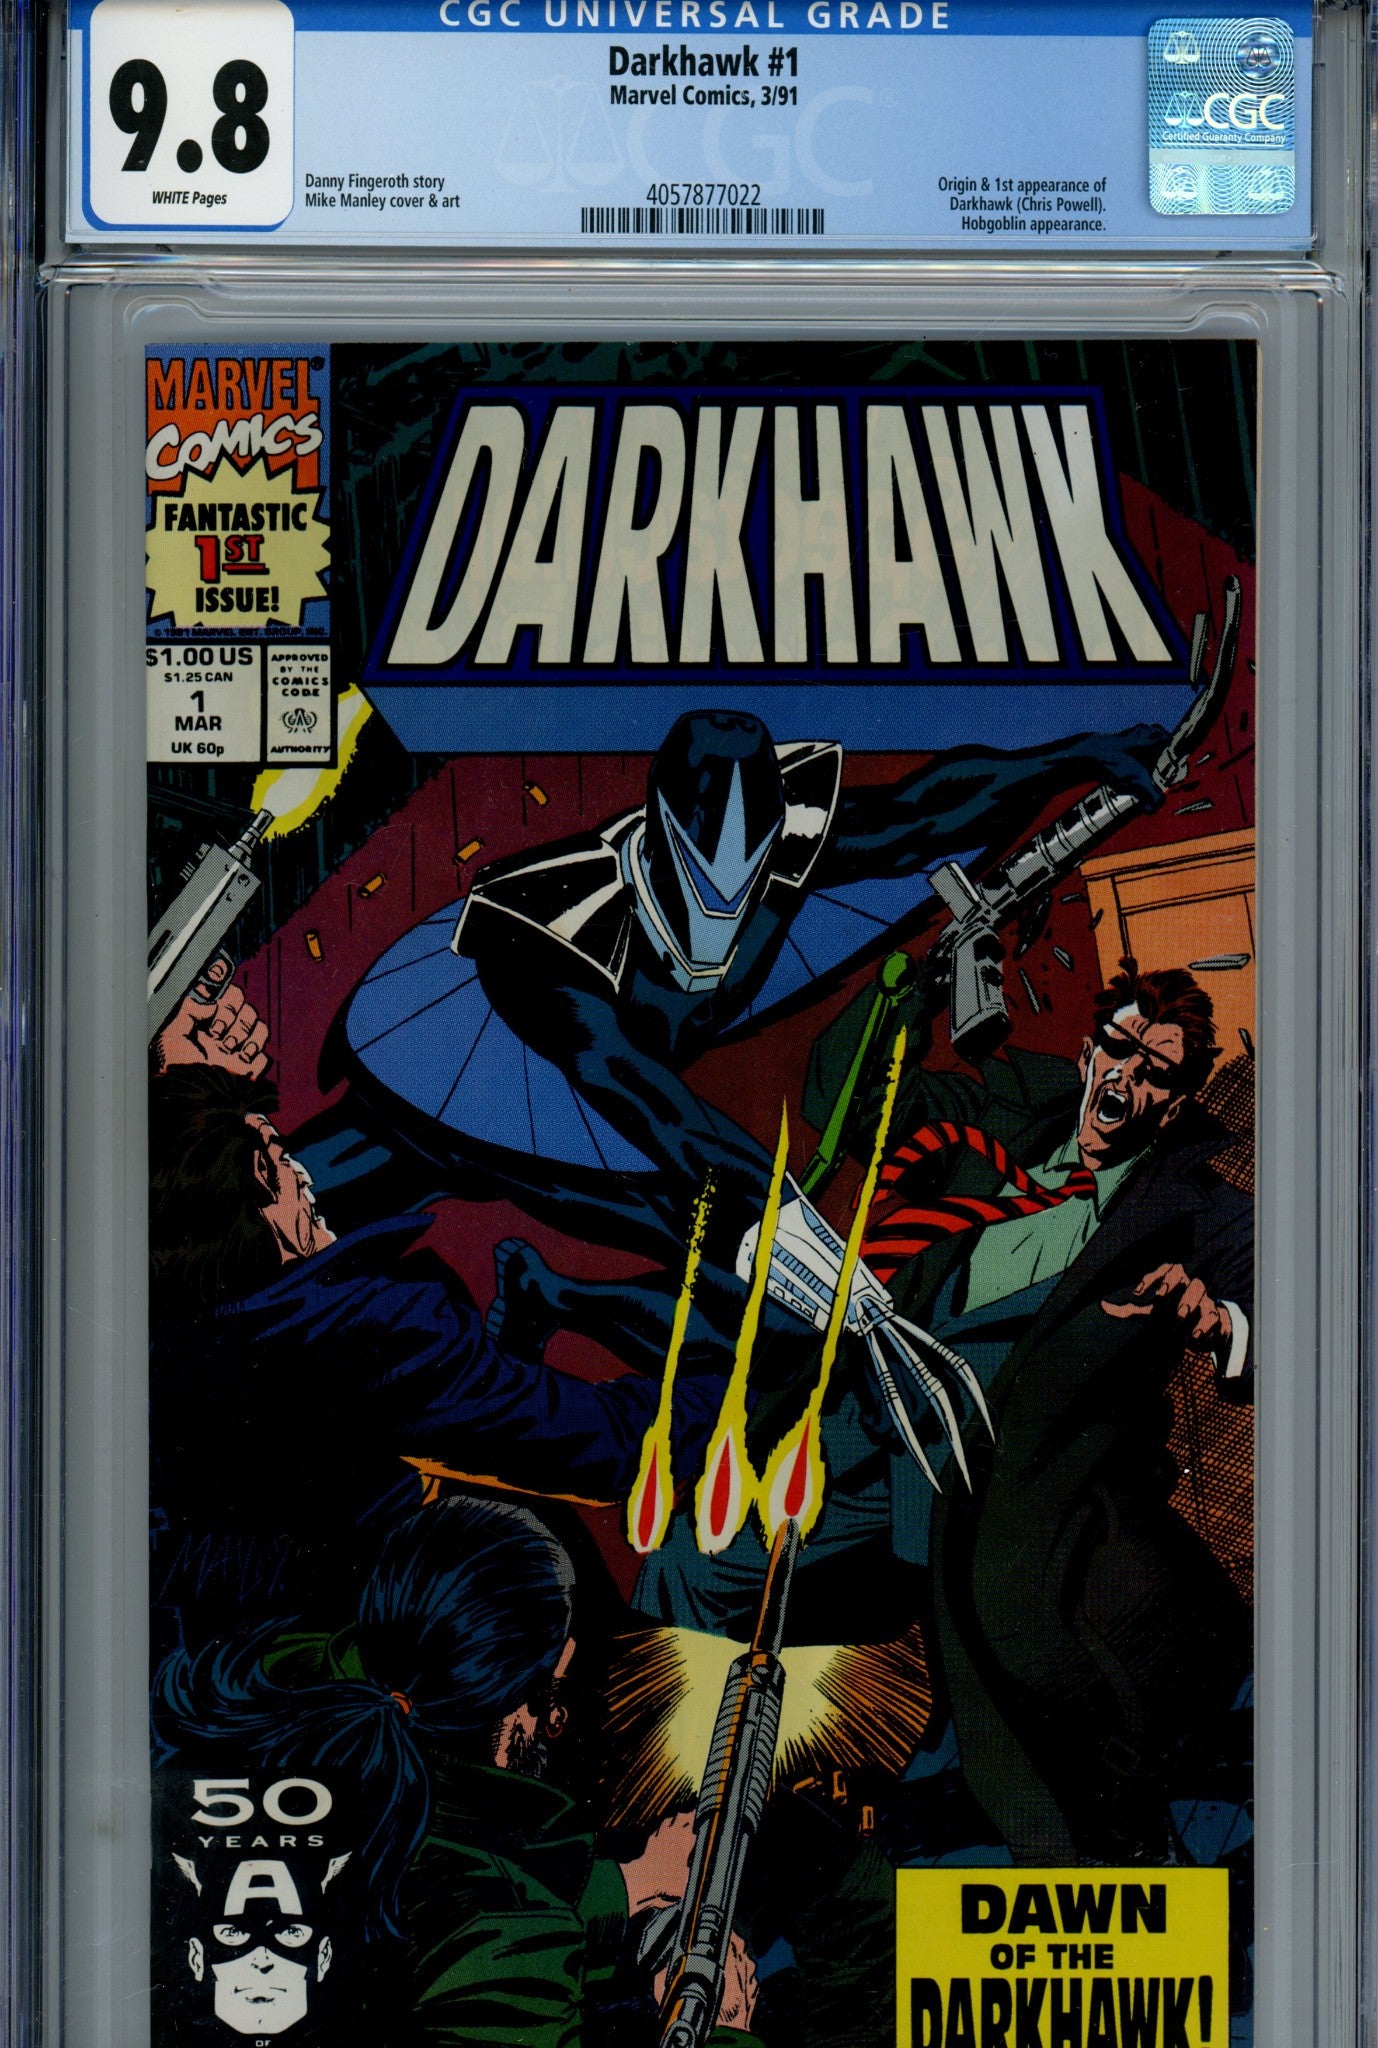 Darkhawk Vol 1 1 CGC 9.8 (1991)